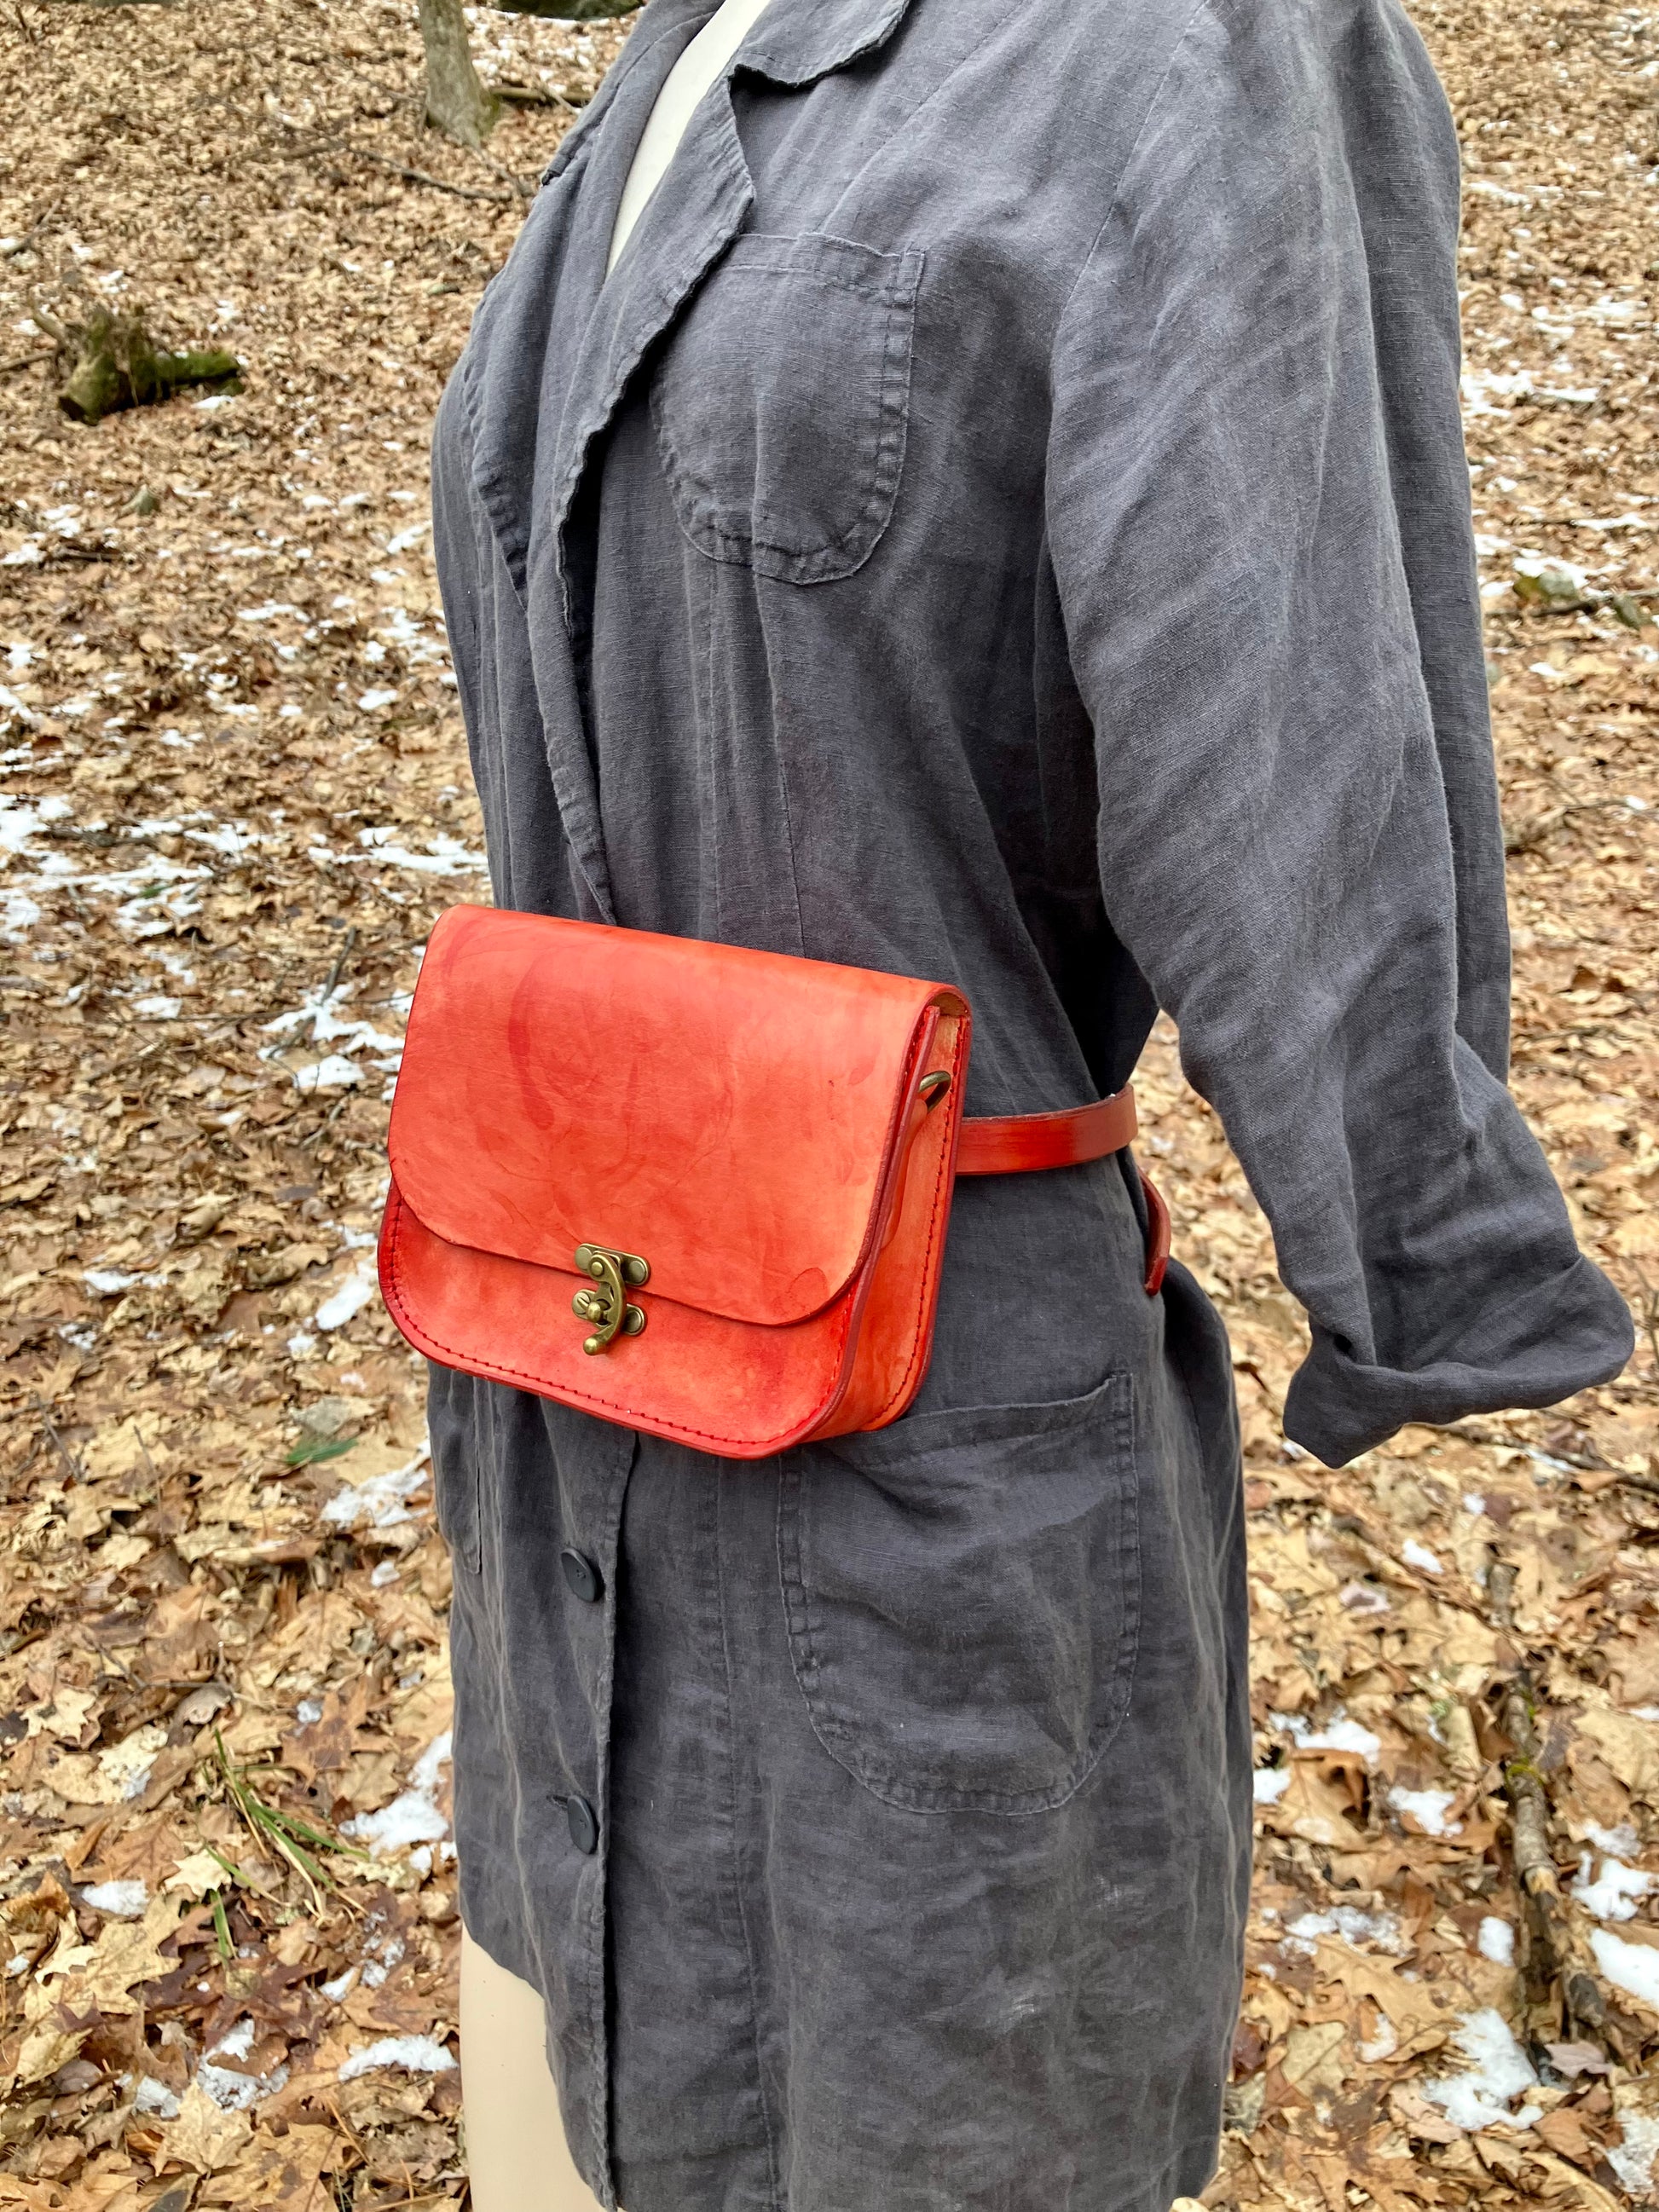 handmade leather bag/belt-bag hybrid with crossbody strap in orange by Wilder Leather